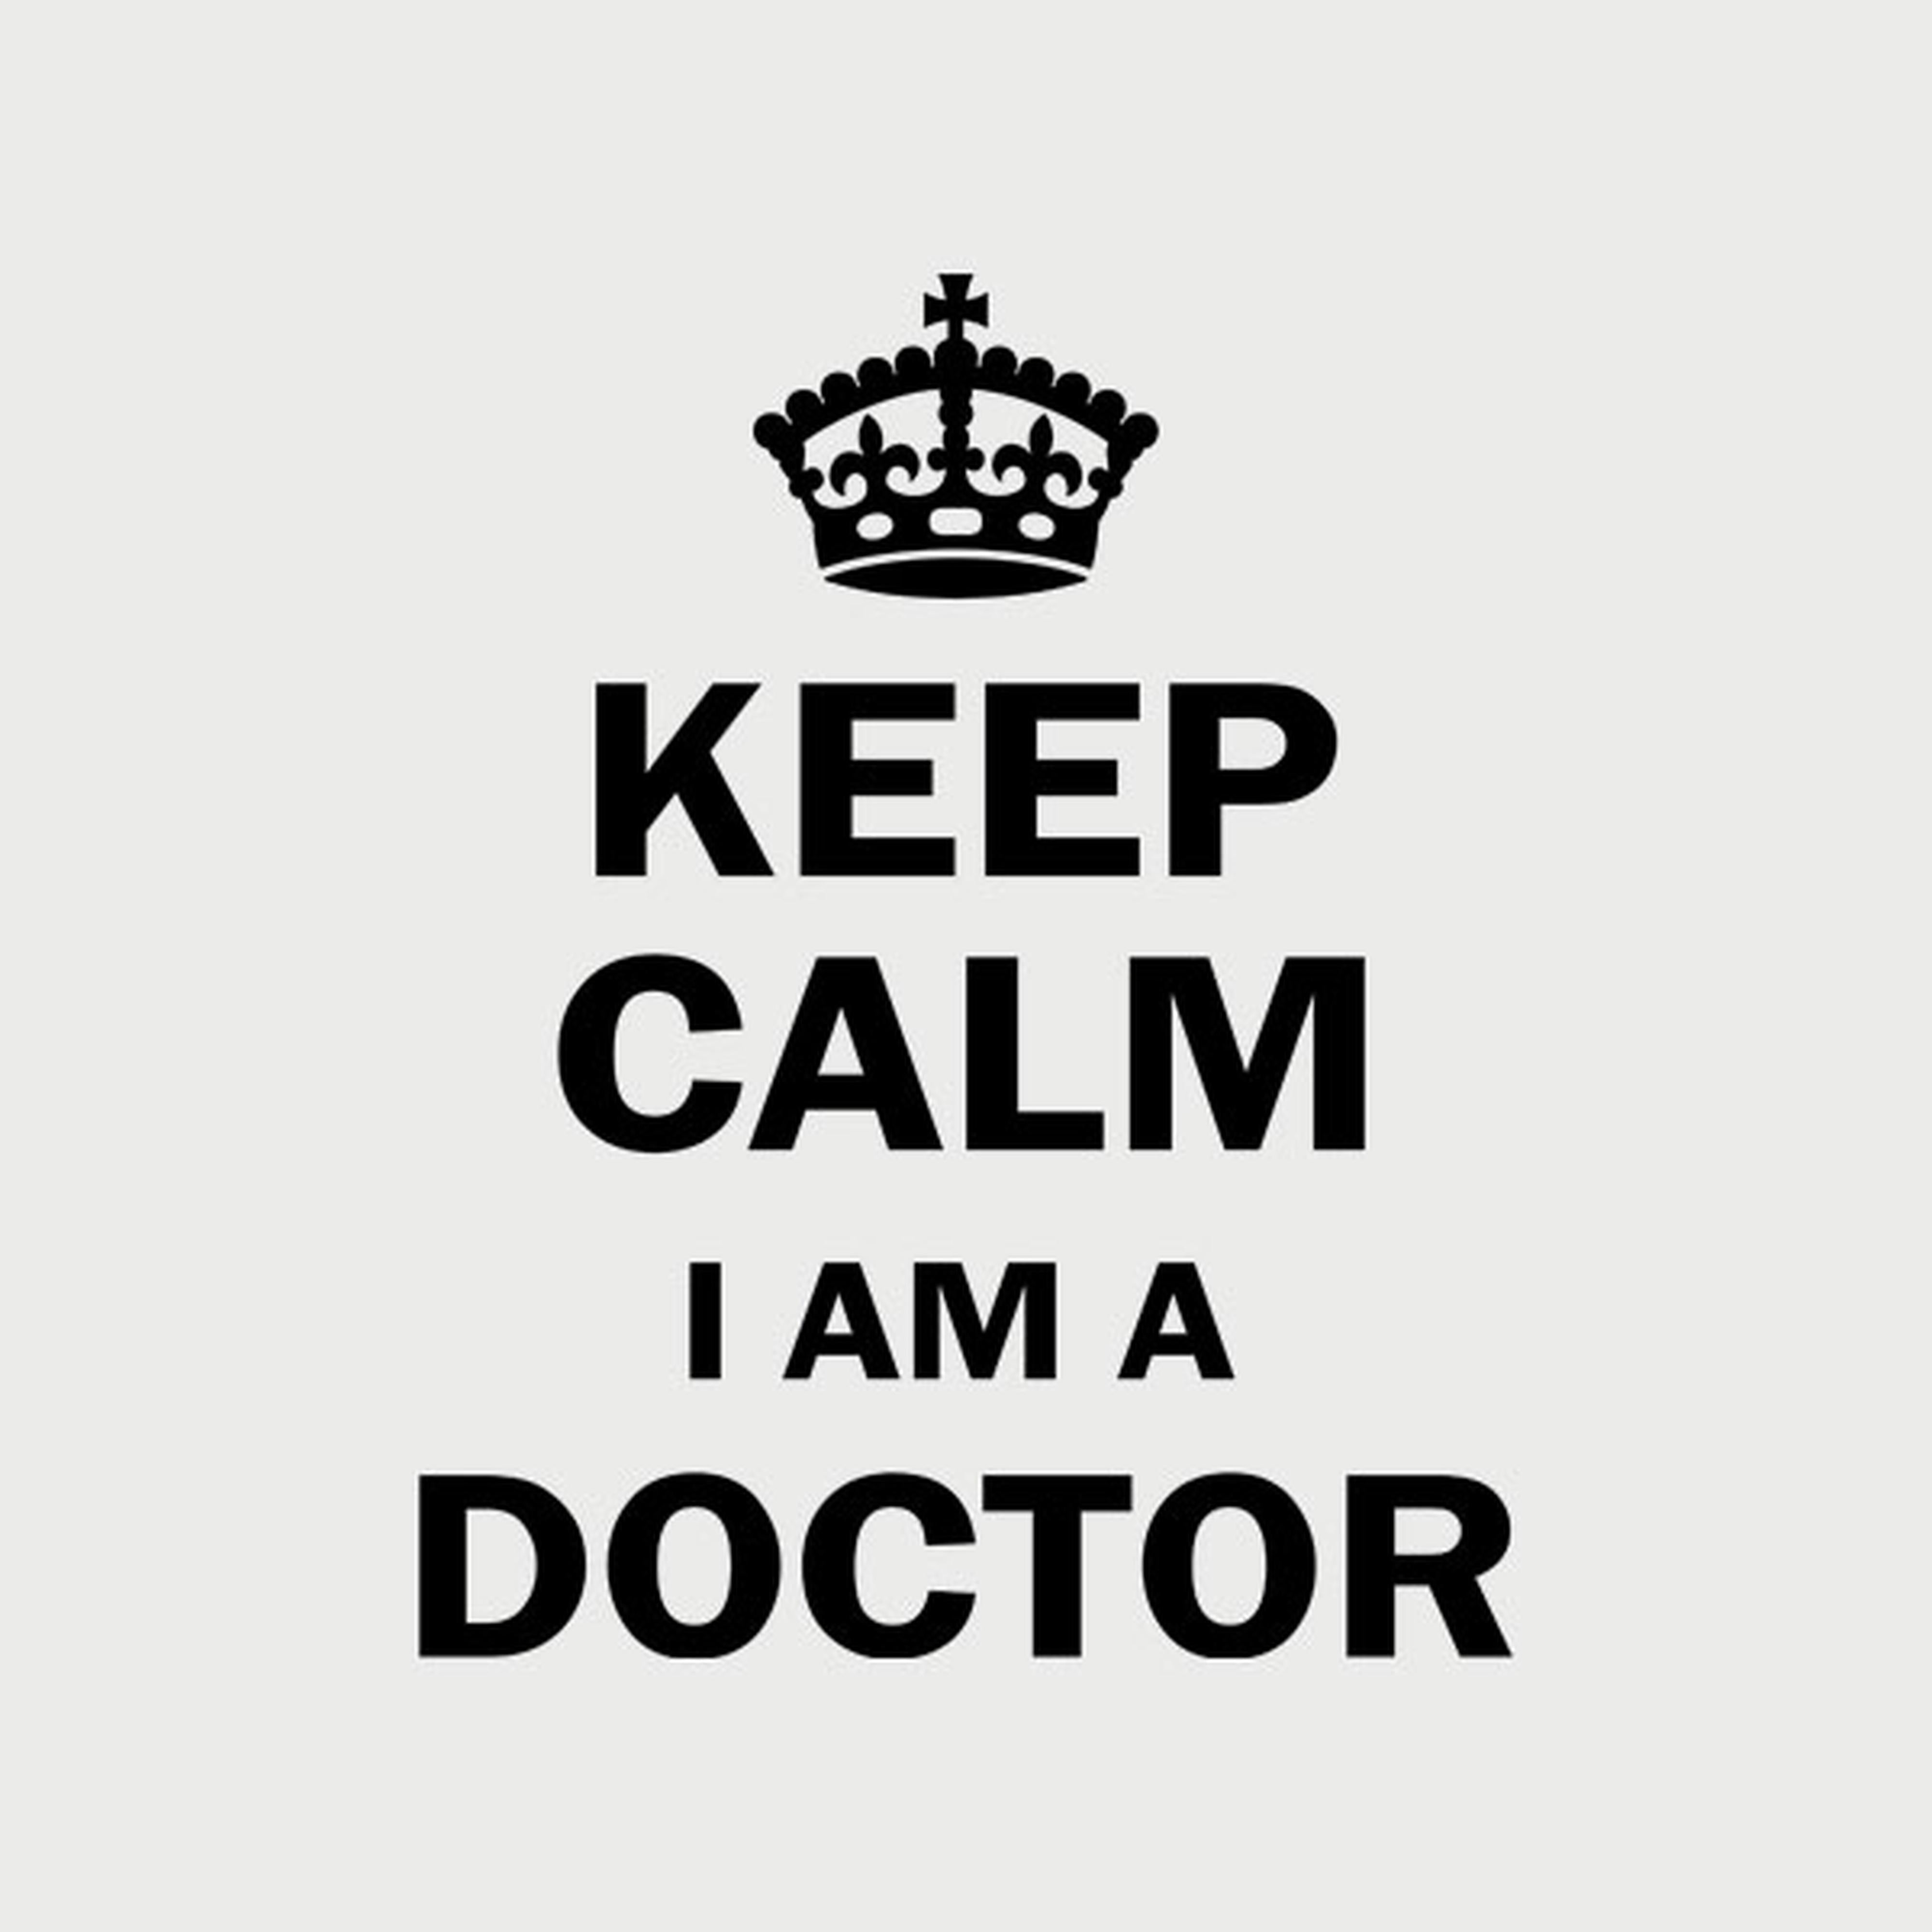 Keep calm. I am a doctor T-shirt